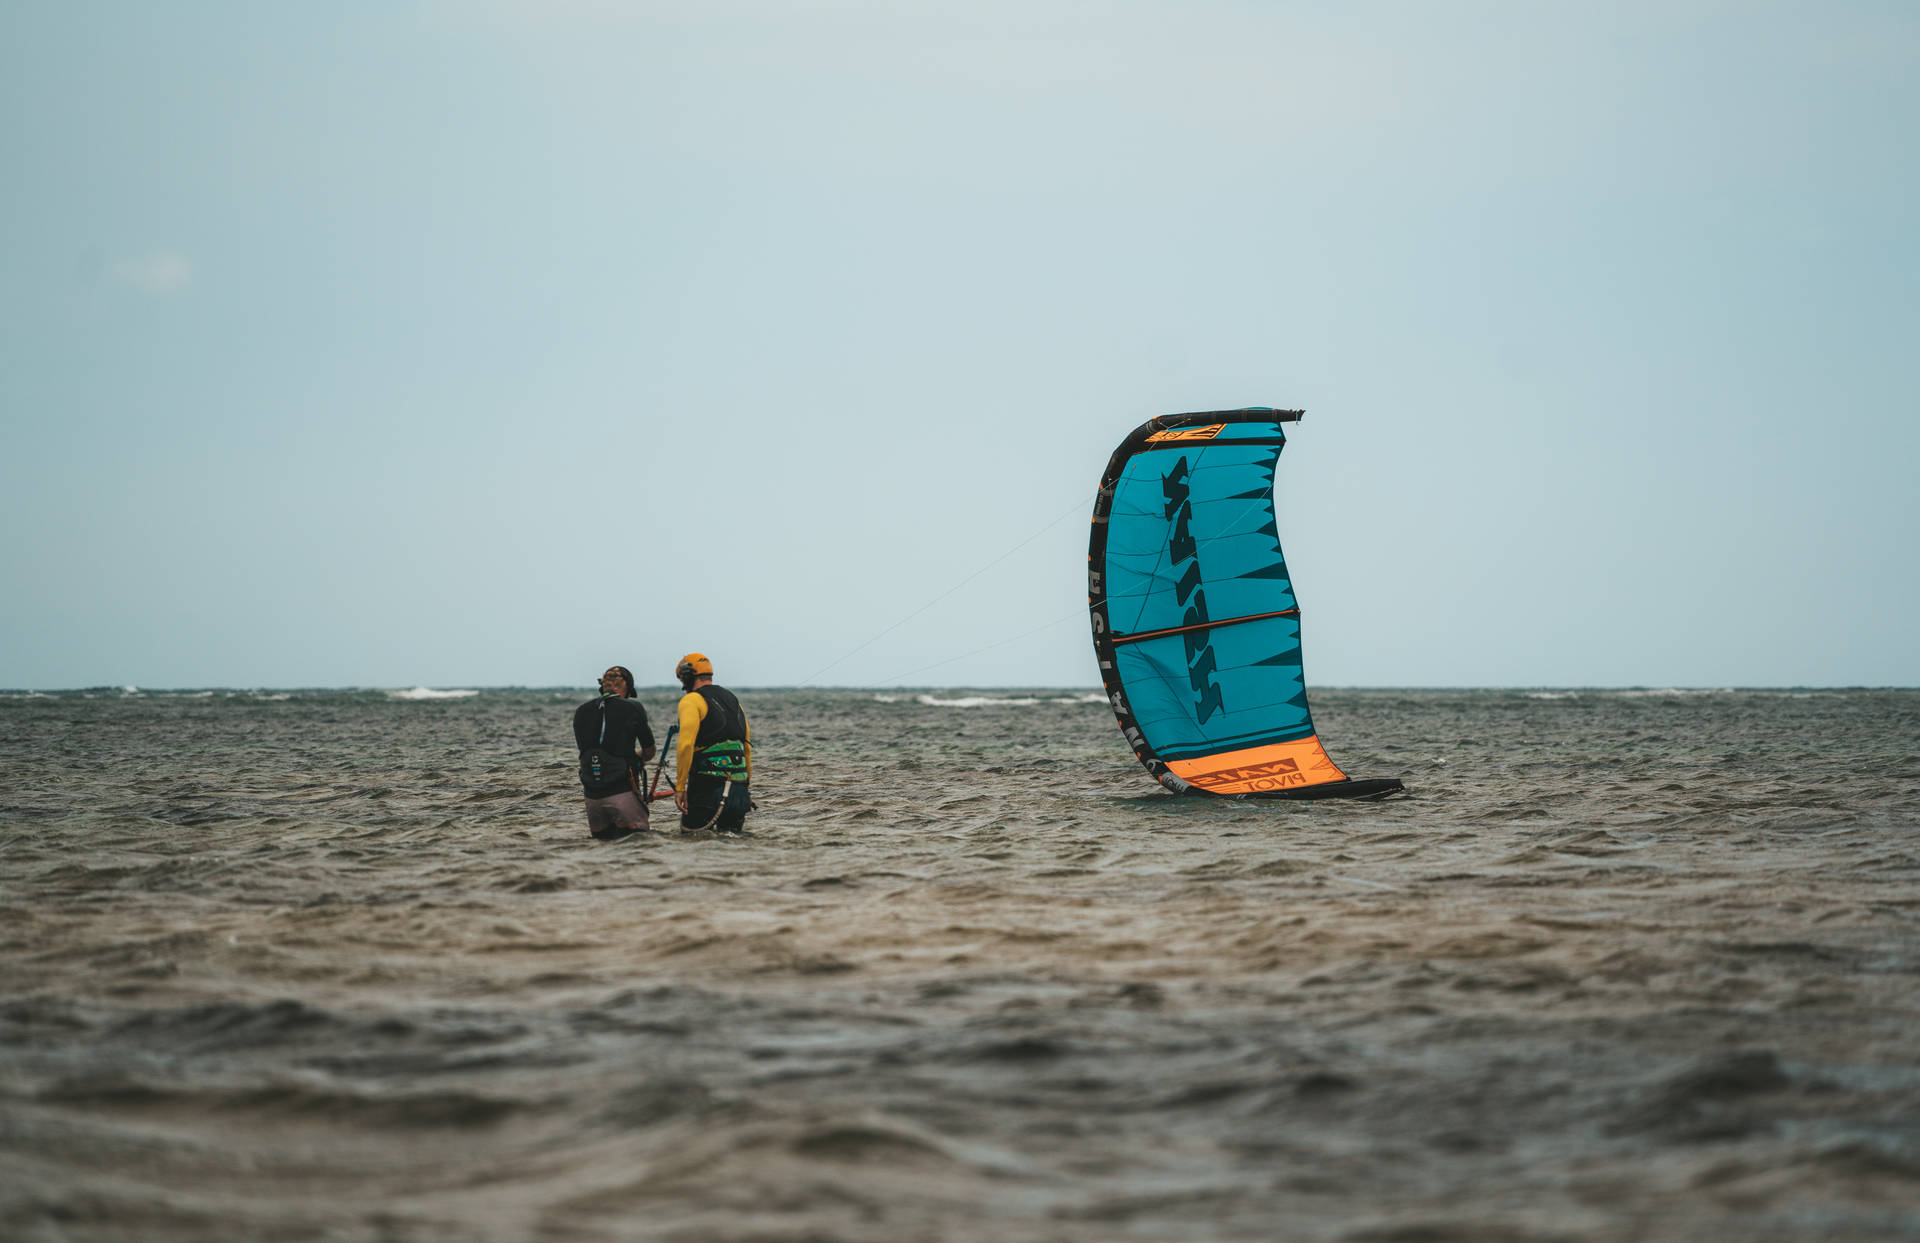 Fallen Windsurfing Sail Background